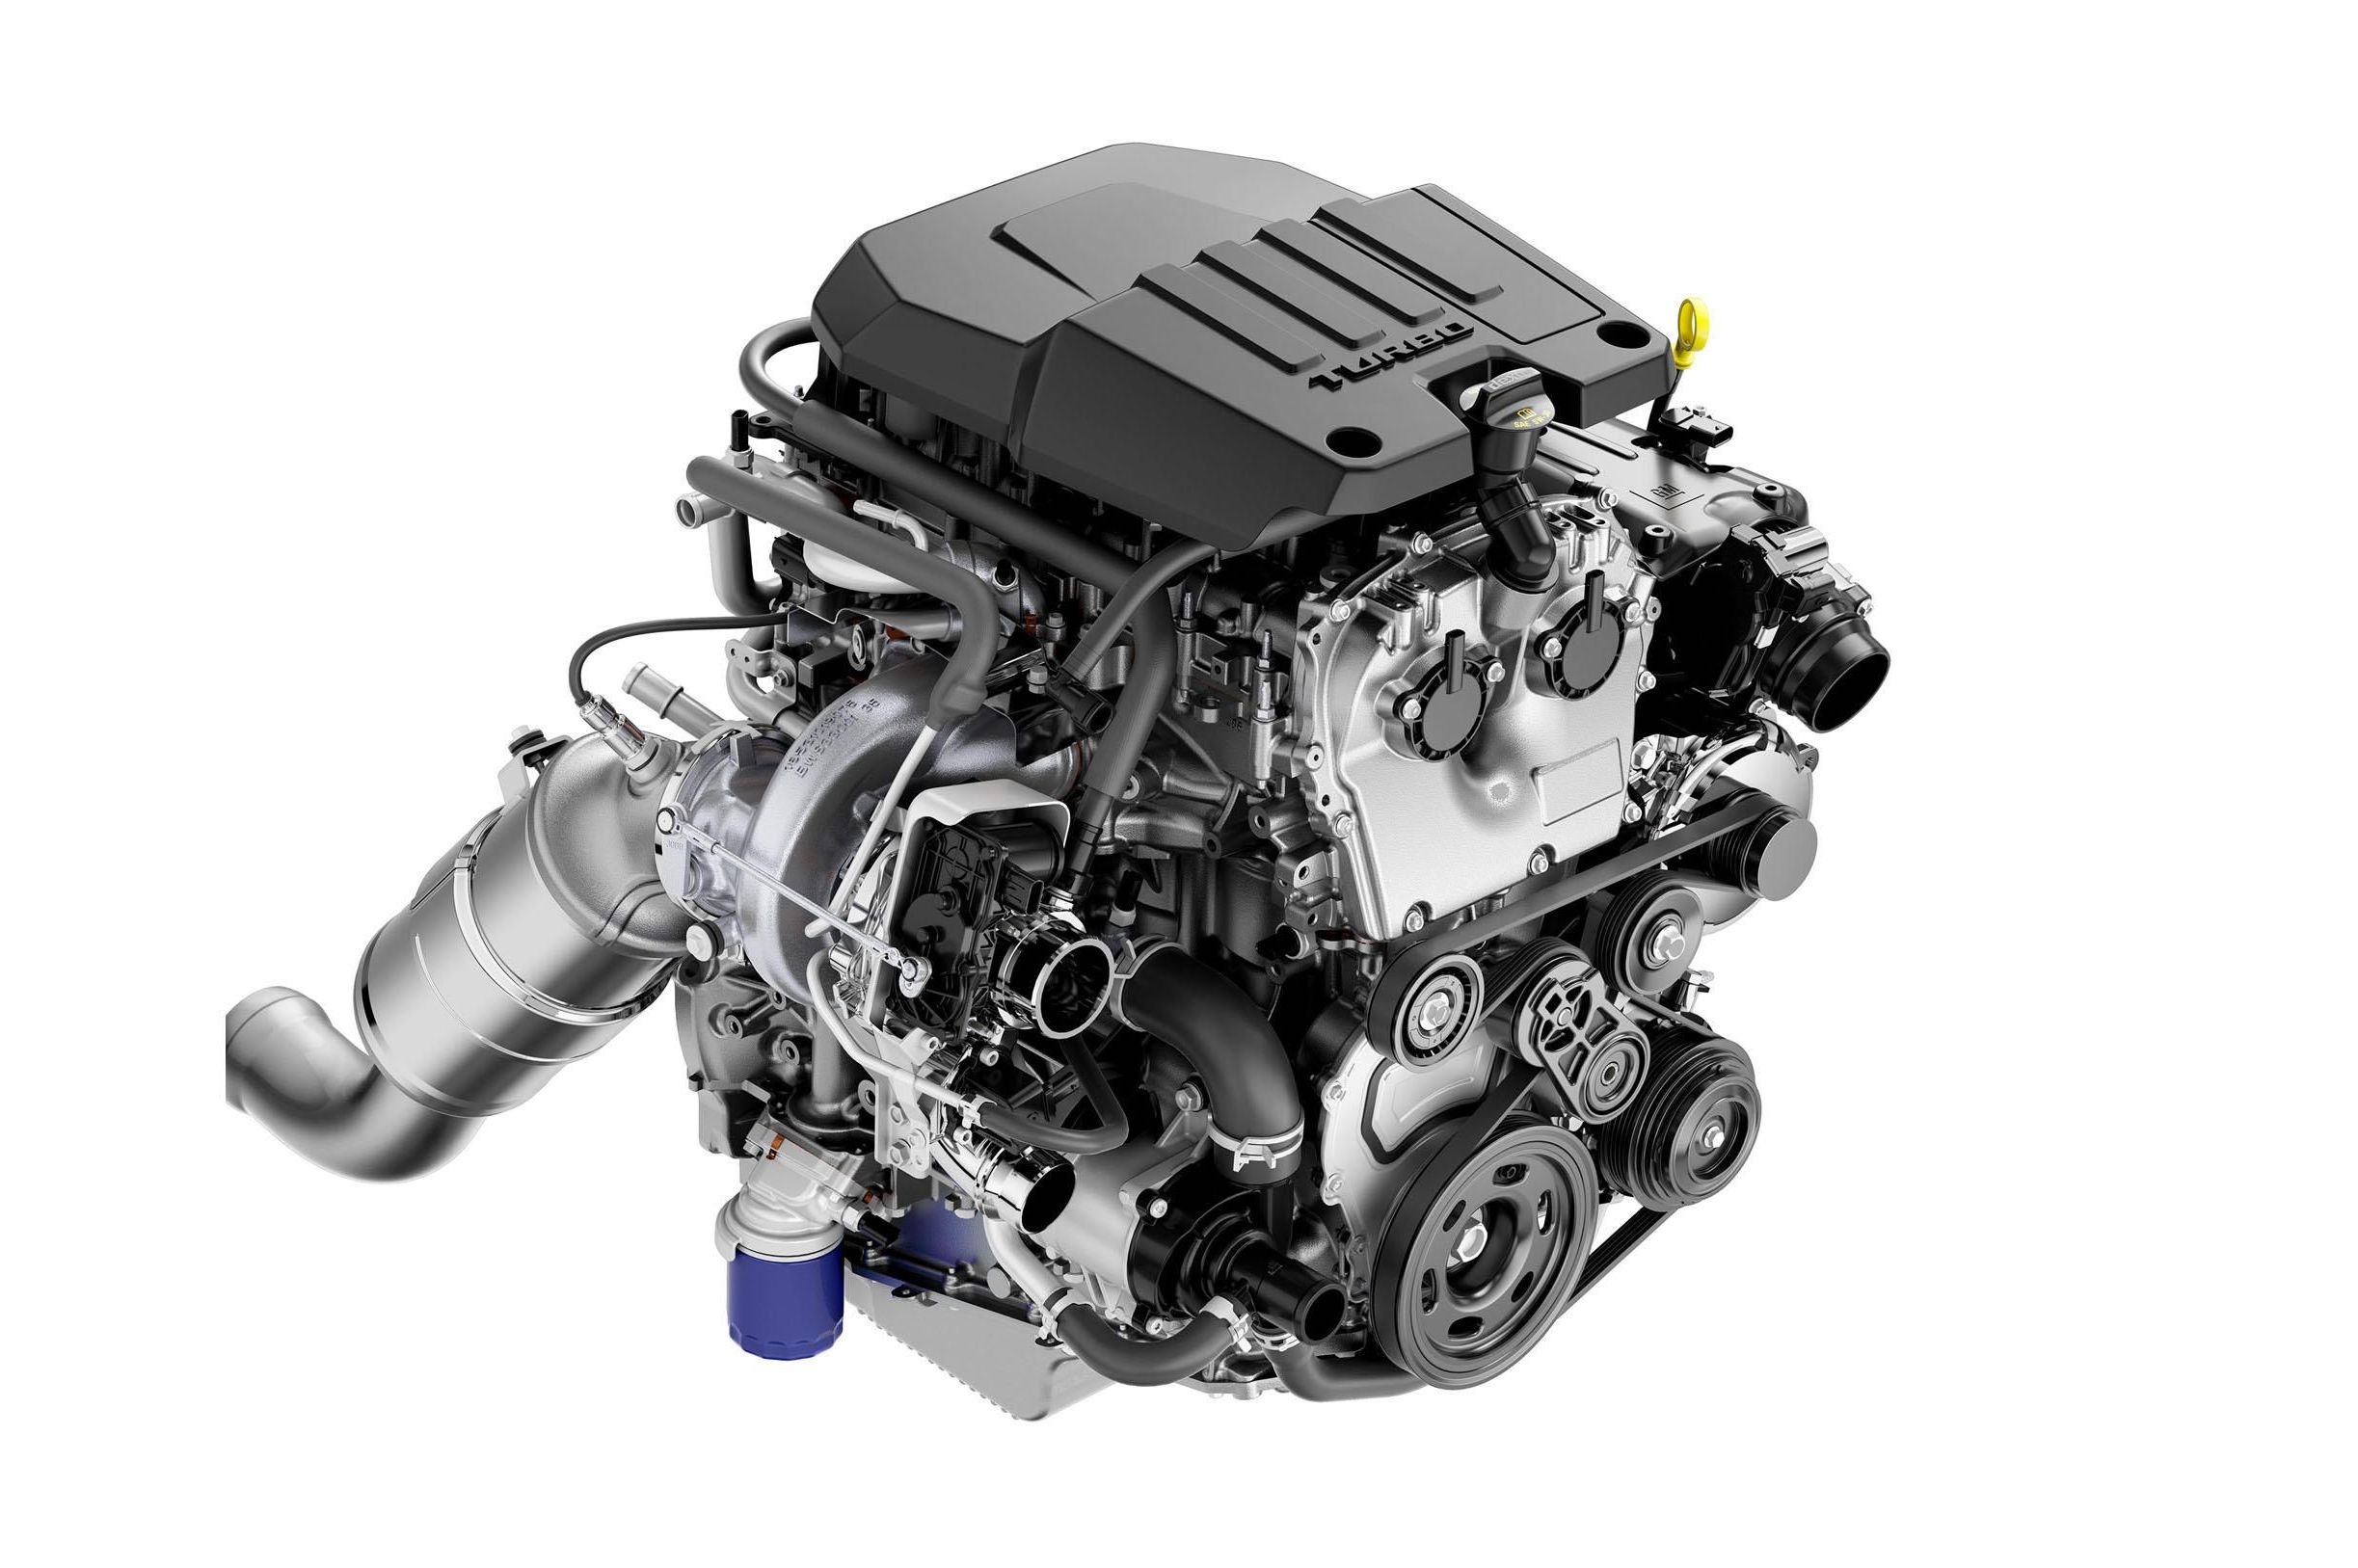 GM reveals potent new 2.7L ‘Tripower’ turbo 4-cylinder